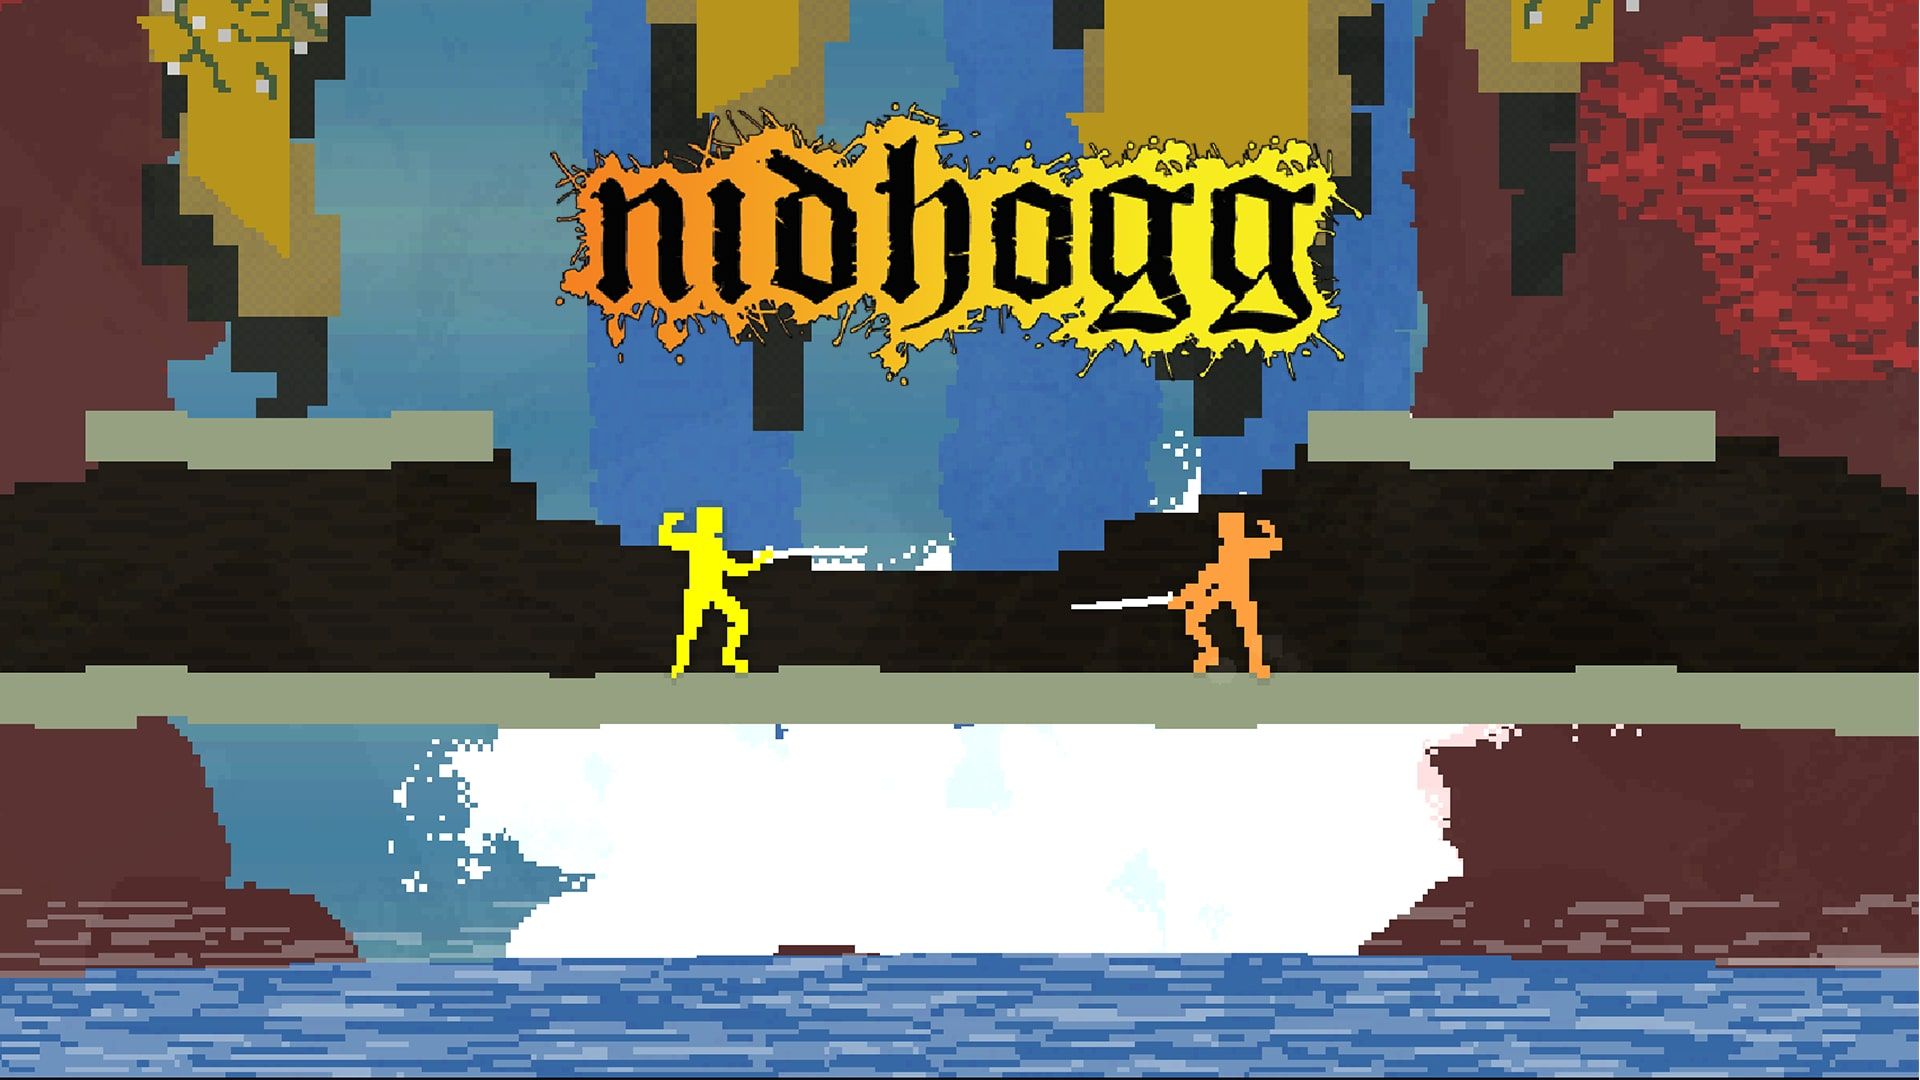 Nidhogg cover image